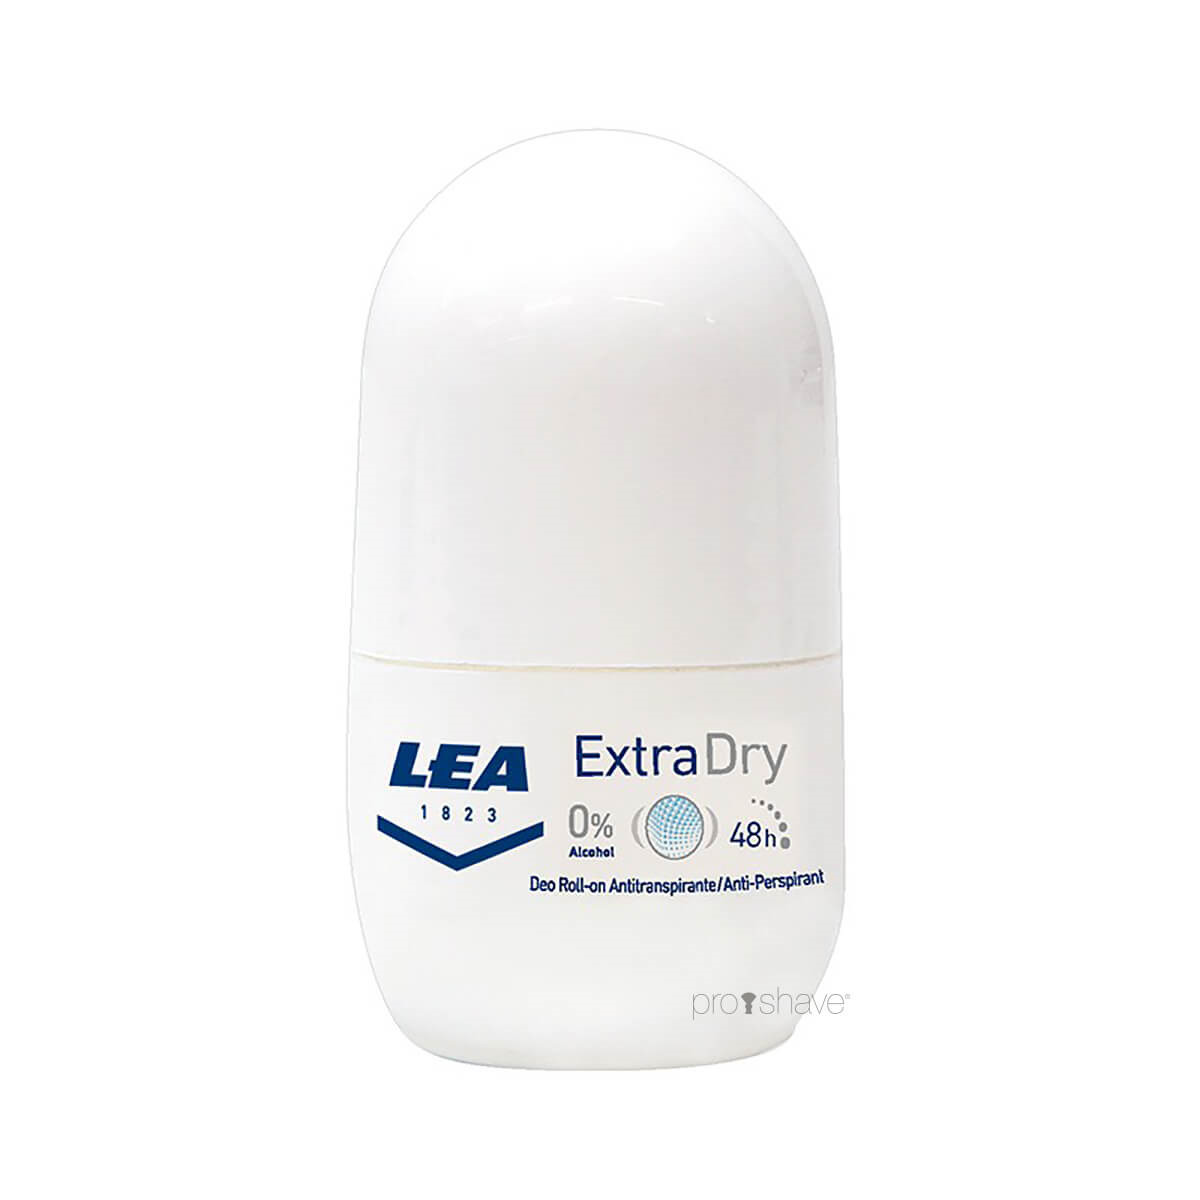 Se LEA Deo Roll on Extra Dry, Rejsestørrelse, 20 ml. hos Proshave